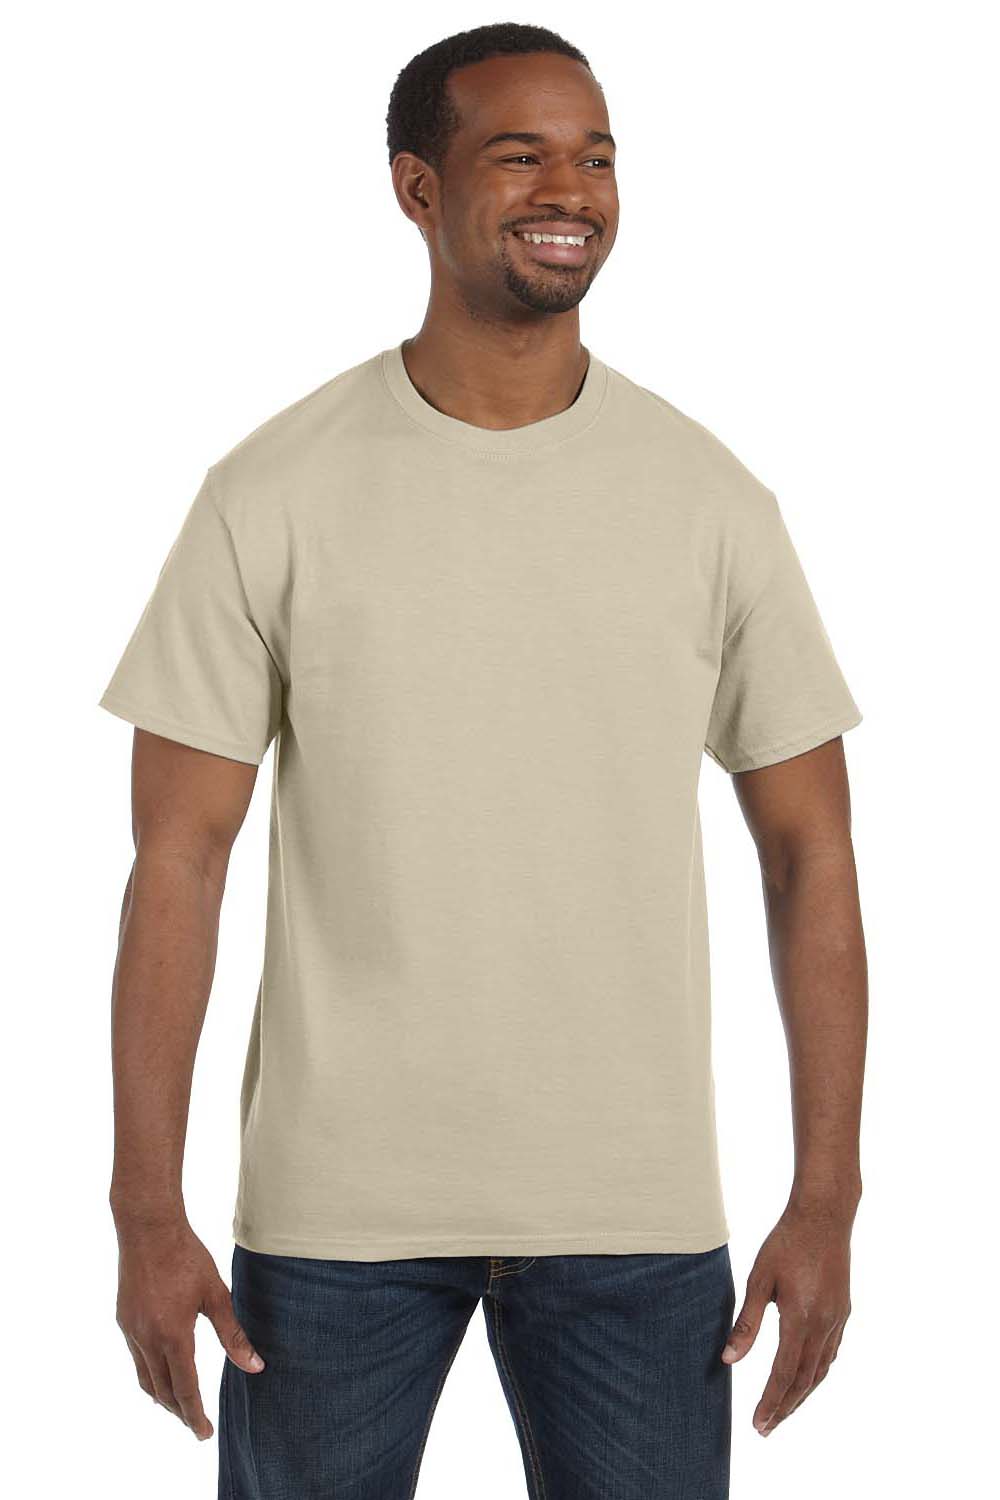 Hanes 5250T Mens ComfortSoft Short Sleeve Crewneck T-Shirt Sand Brown Front